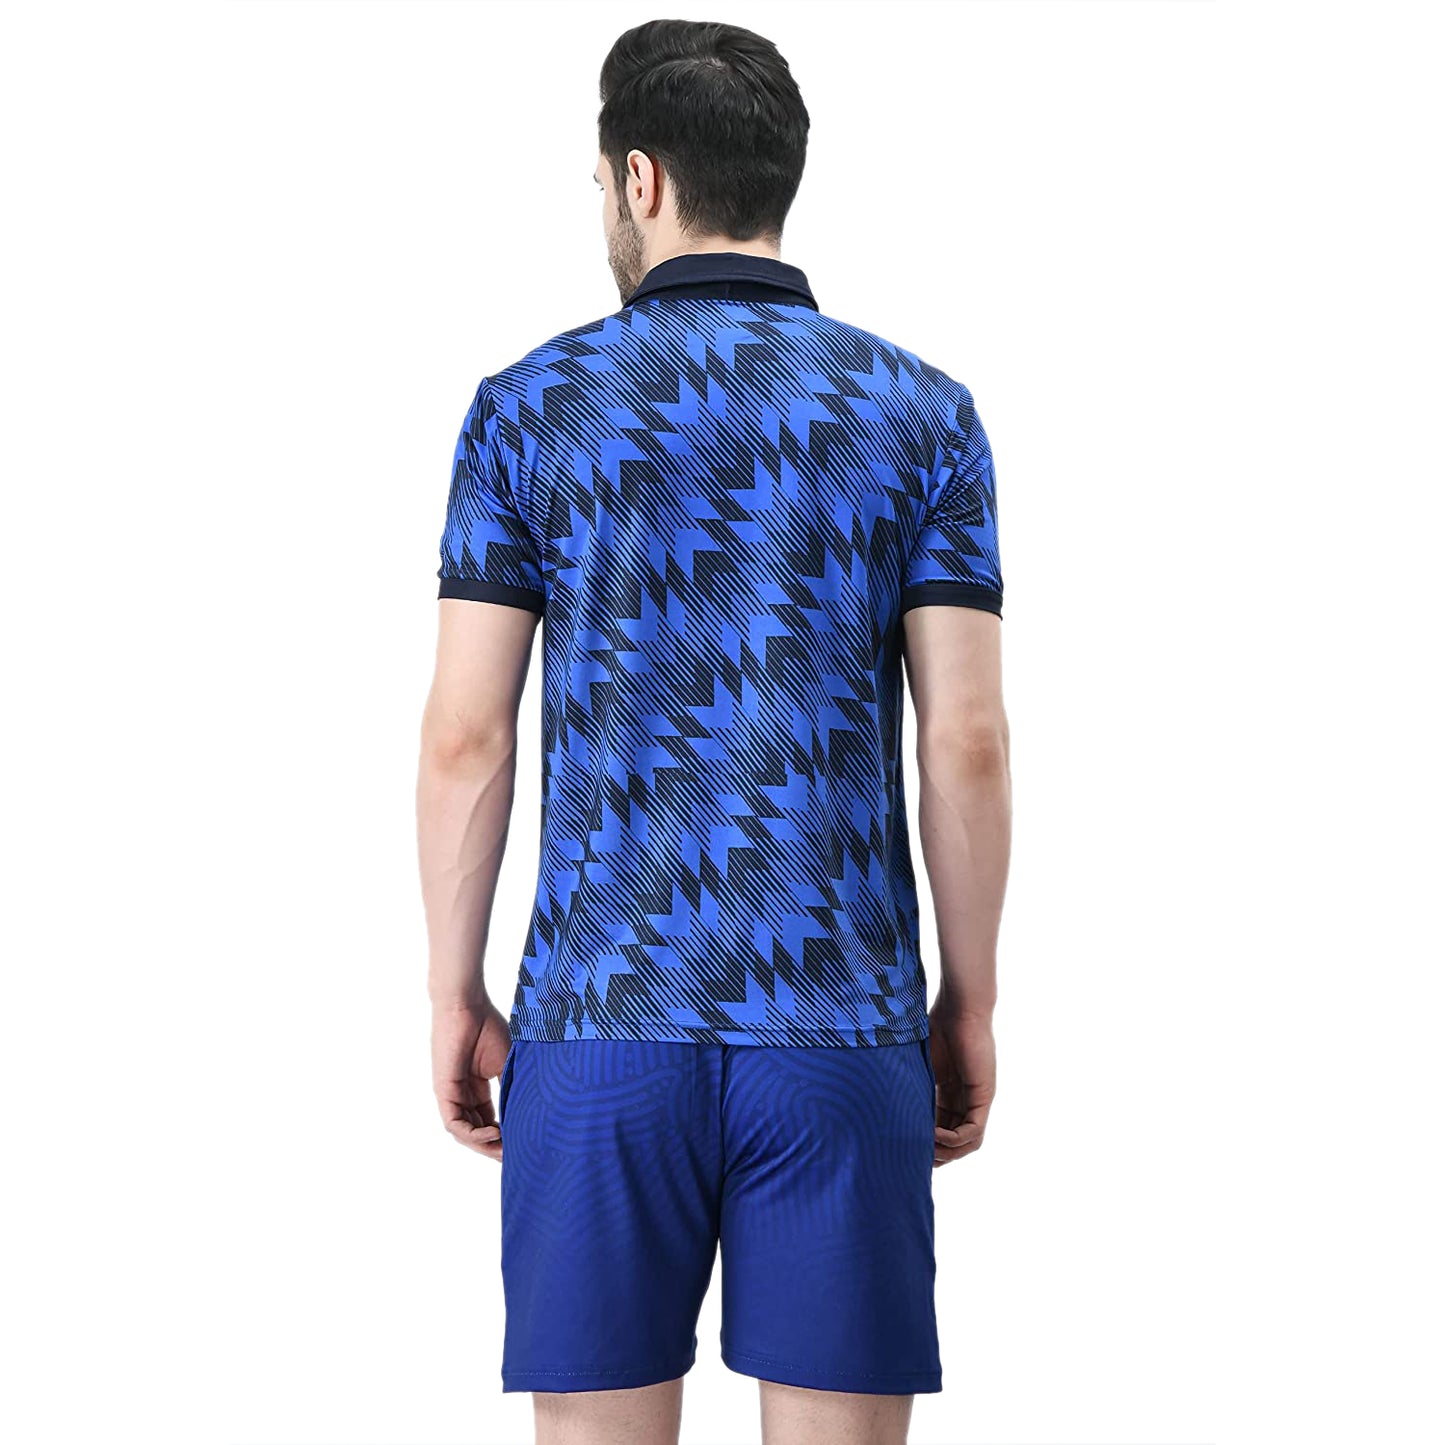 Playr Icc T20 Men's Regular Fit T-Shirt, Royal Blue - Best Price online Prokicksports.com